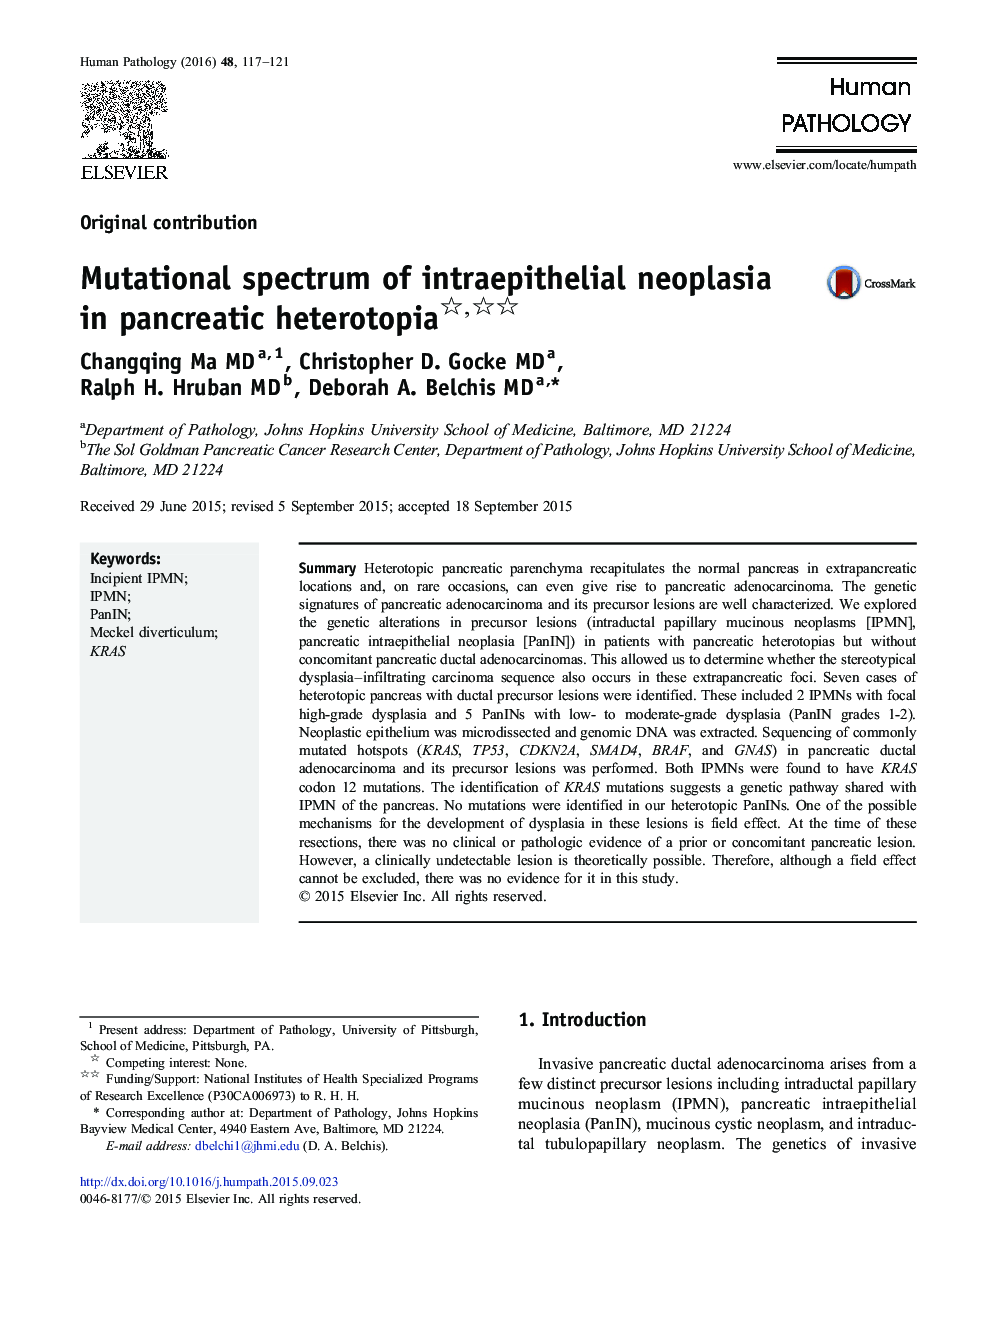 Mutational spectrum of intraepithelial neoplasia in pancreatic heterotopia 